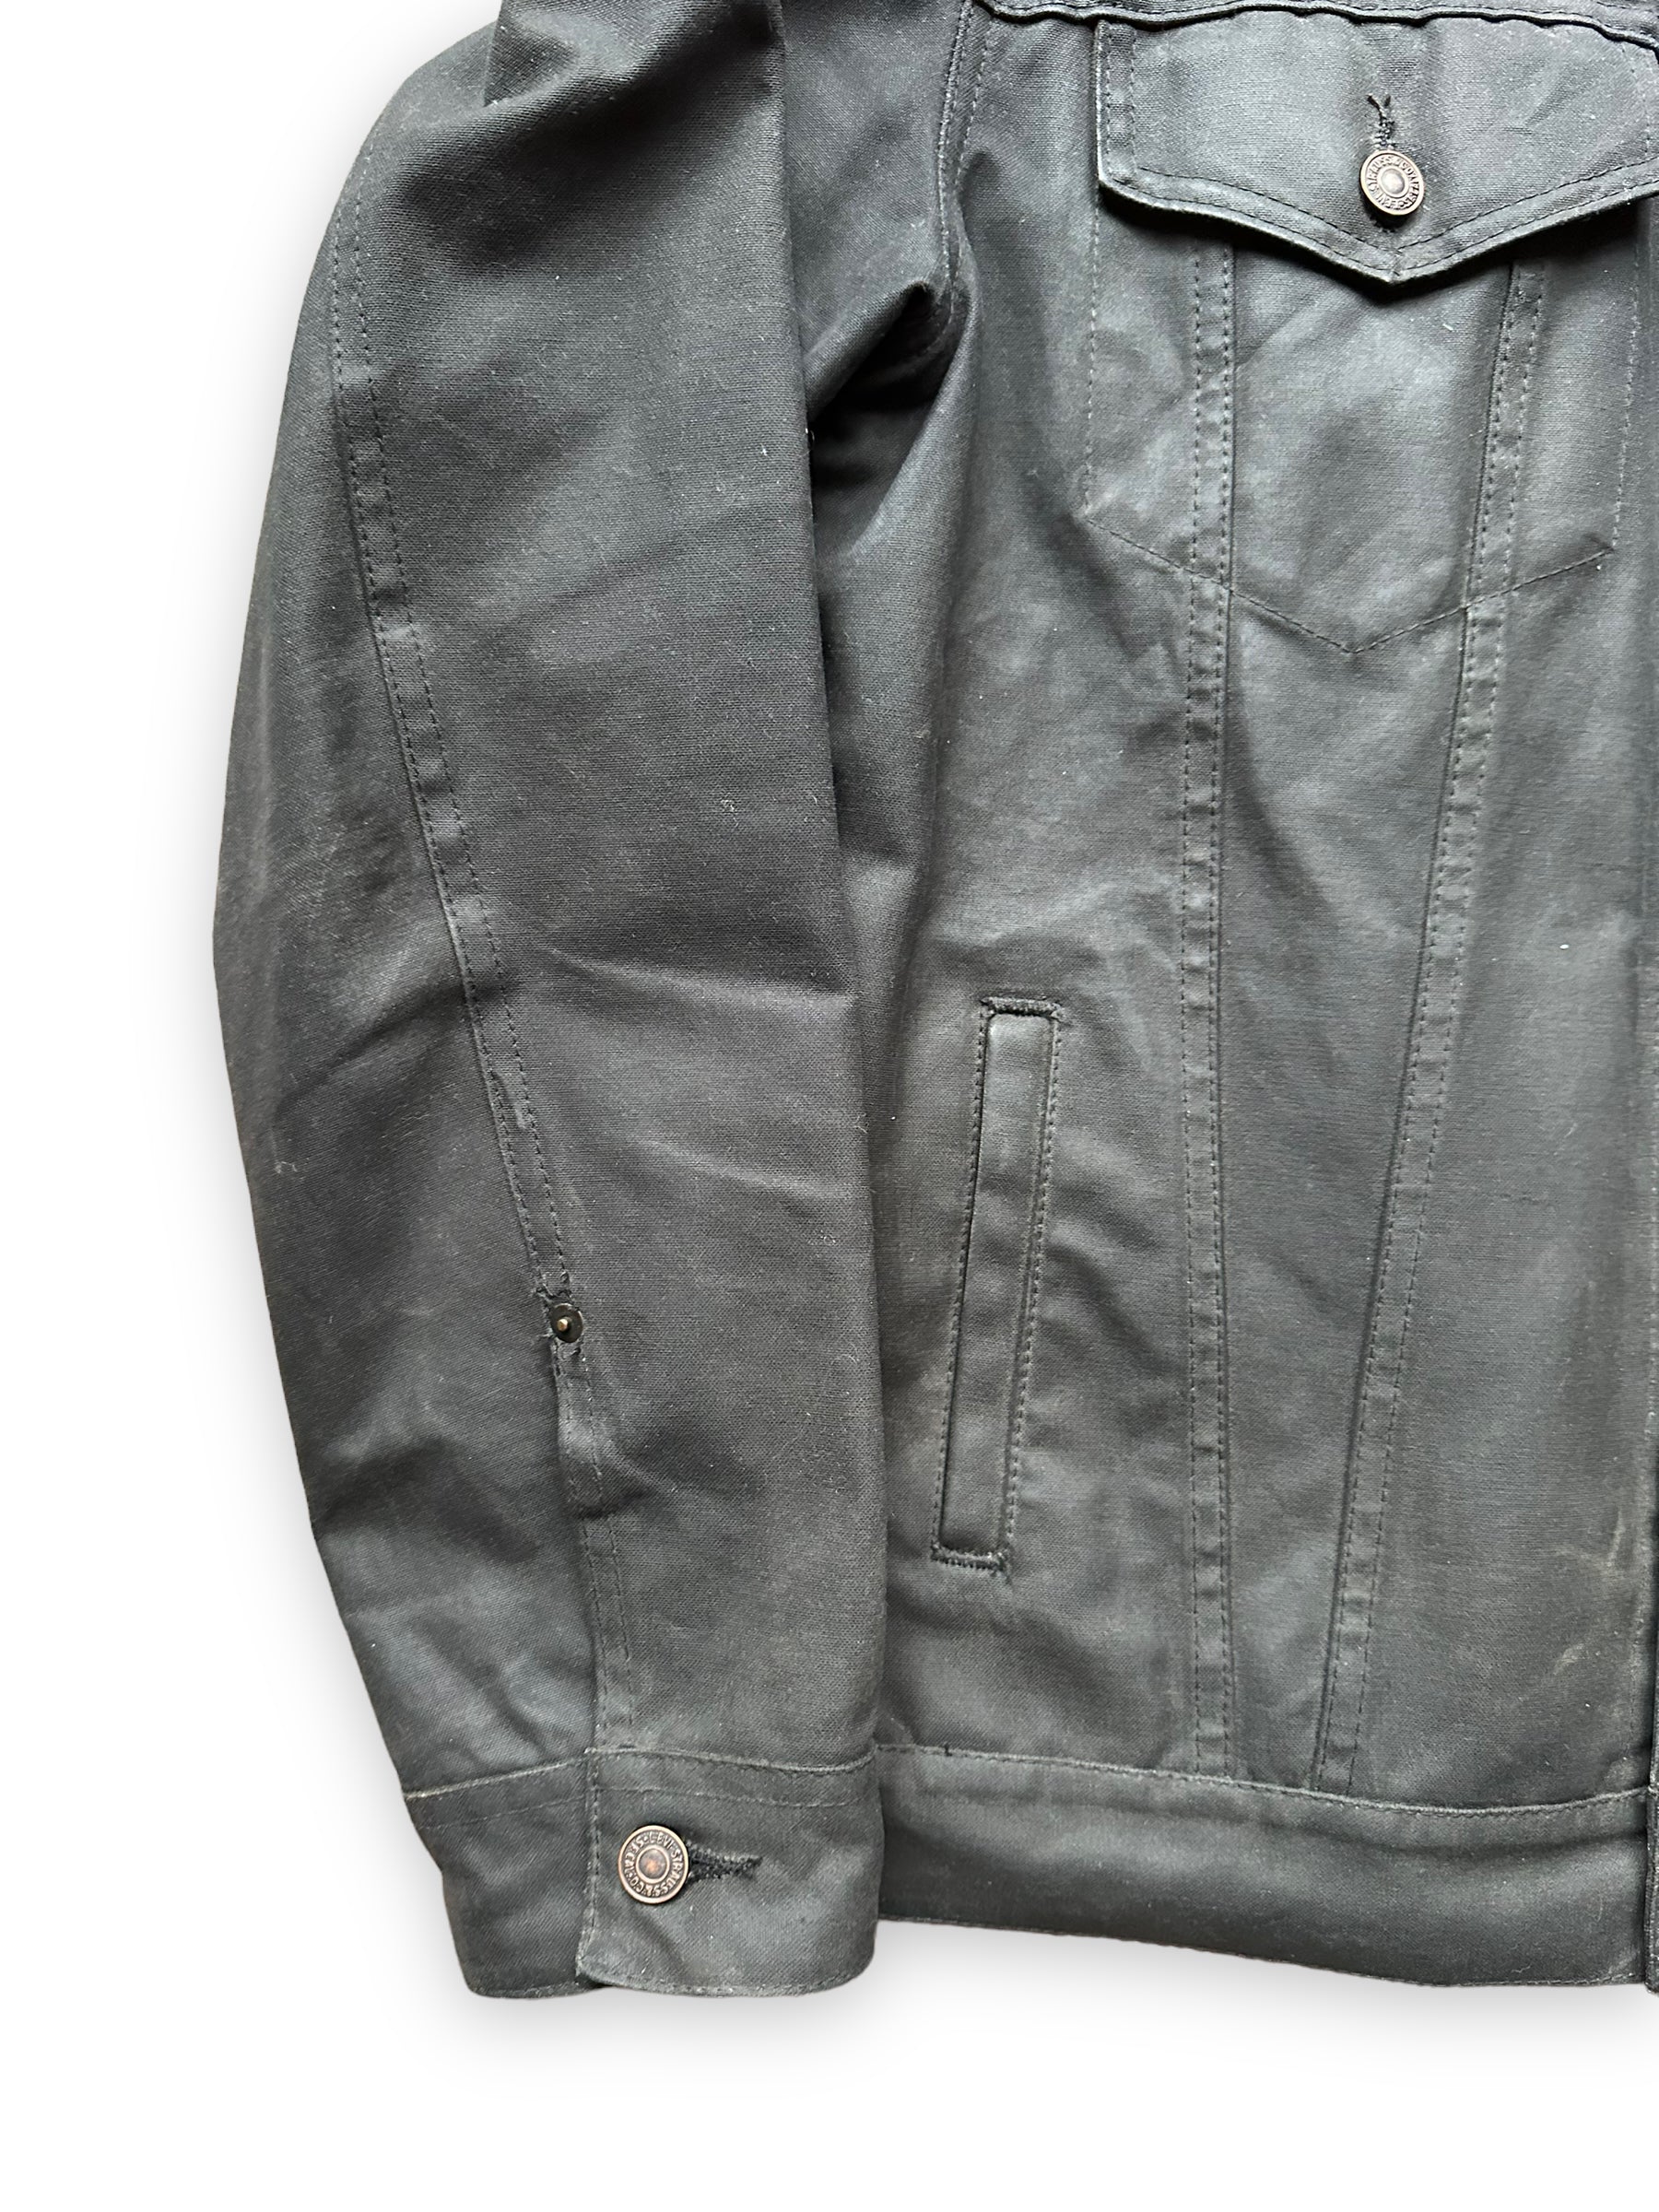 Right Sleeve Detail on Black Levis X Filson Type III Trucker Jacket SZ XL |  Filson Levis Trucker Jacket | Vintage Workwear Seattle